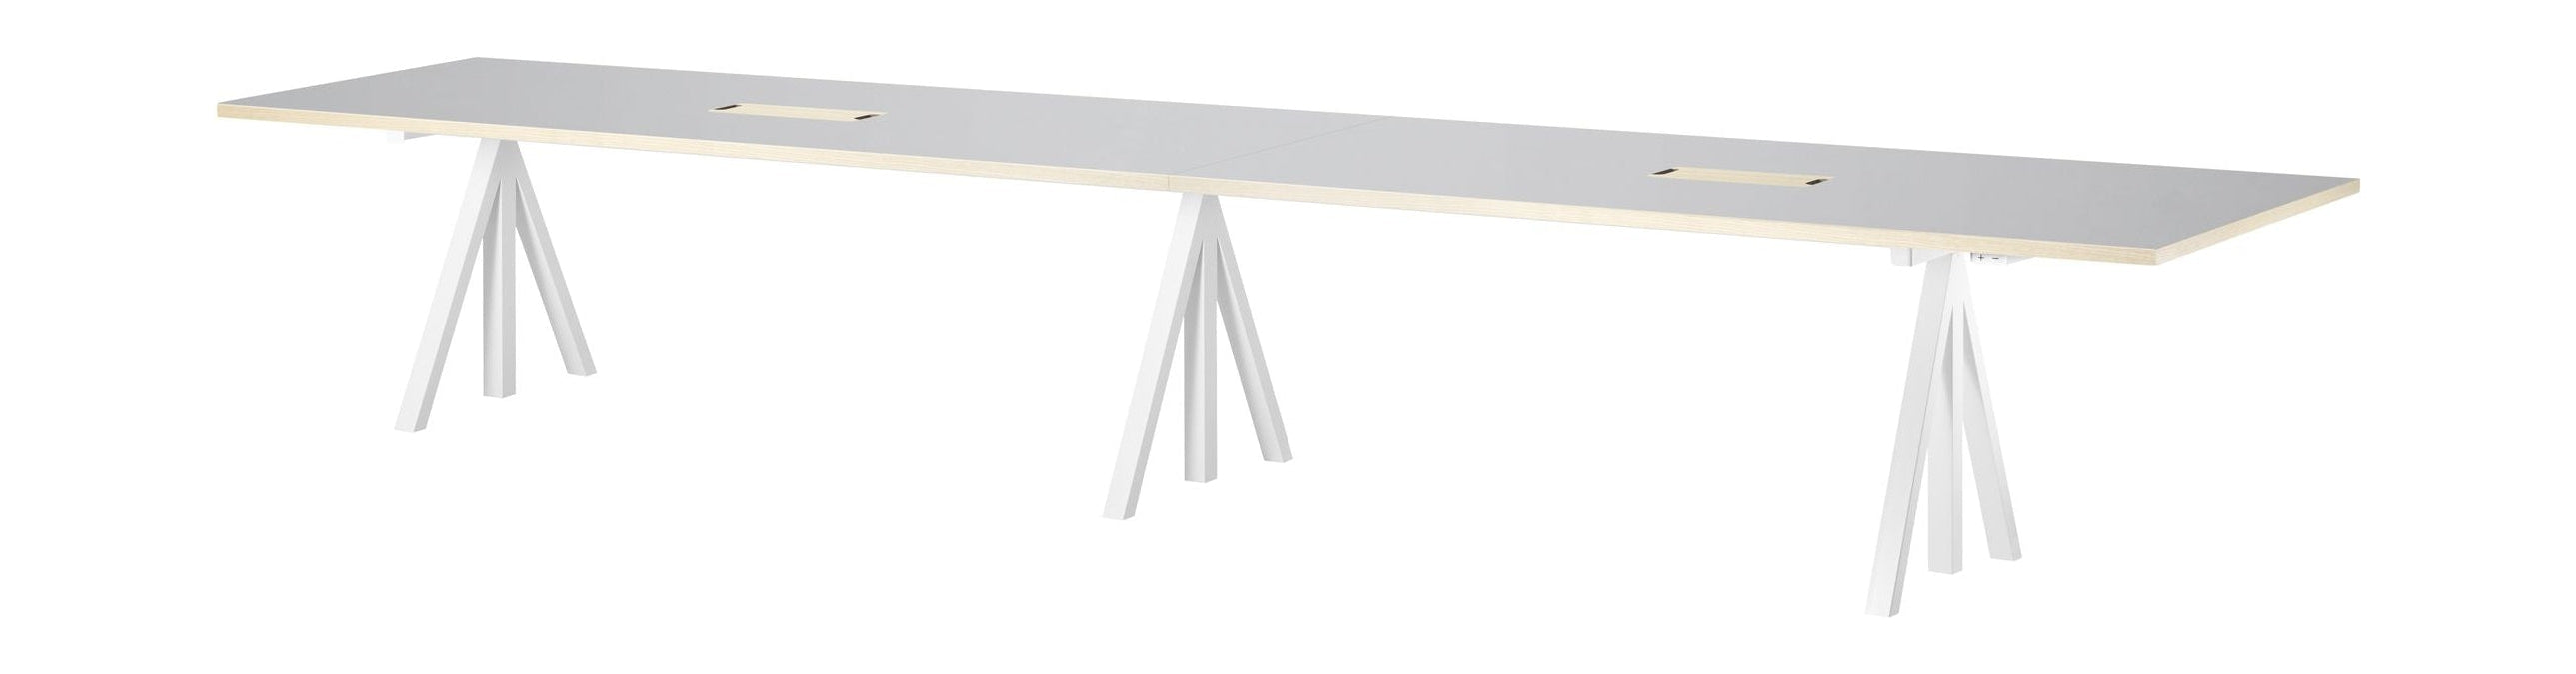 String Furniture Height Adjustable Conference Table 90x180 Cm, Light Grey Linoleum